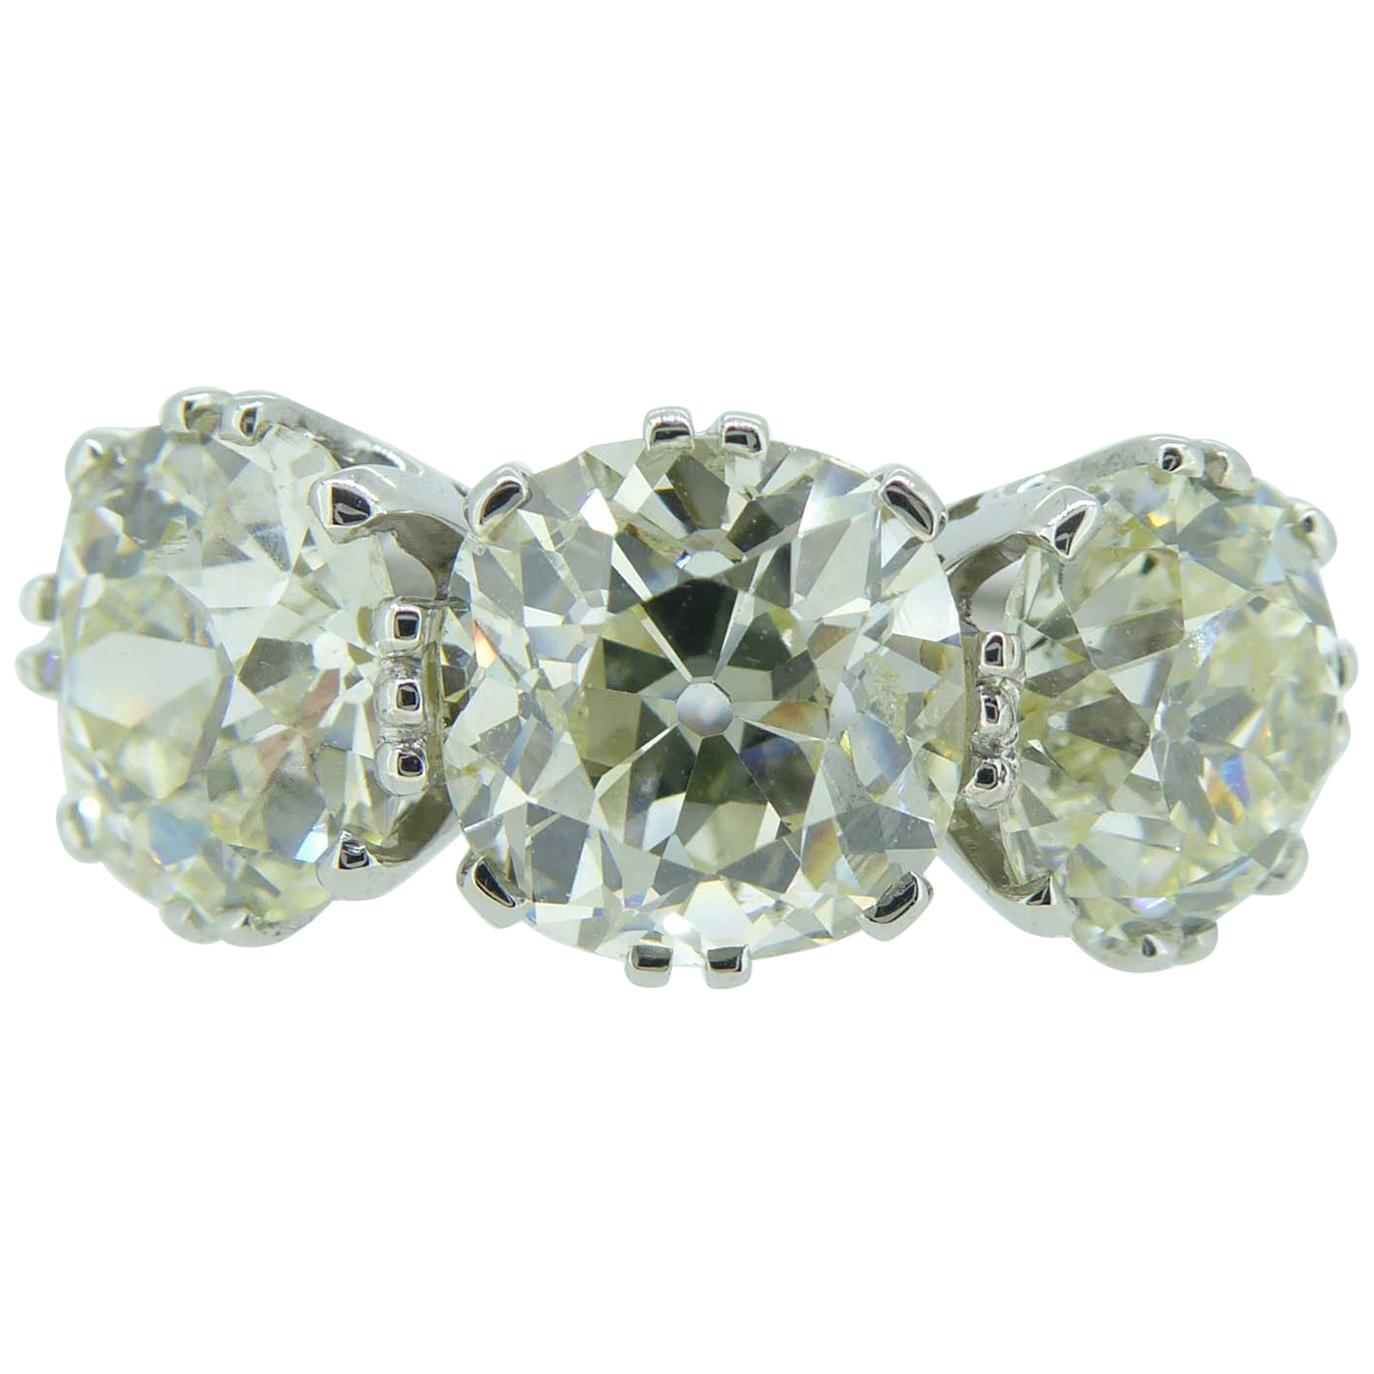 Victorian Old Cut Diamond Ring, 7.39 Carat, Remounted in Platinum Setting